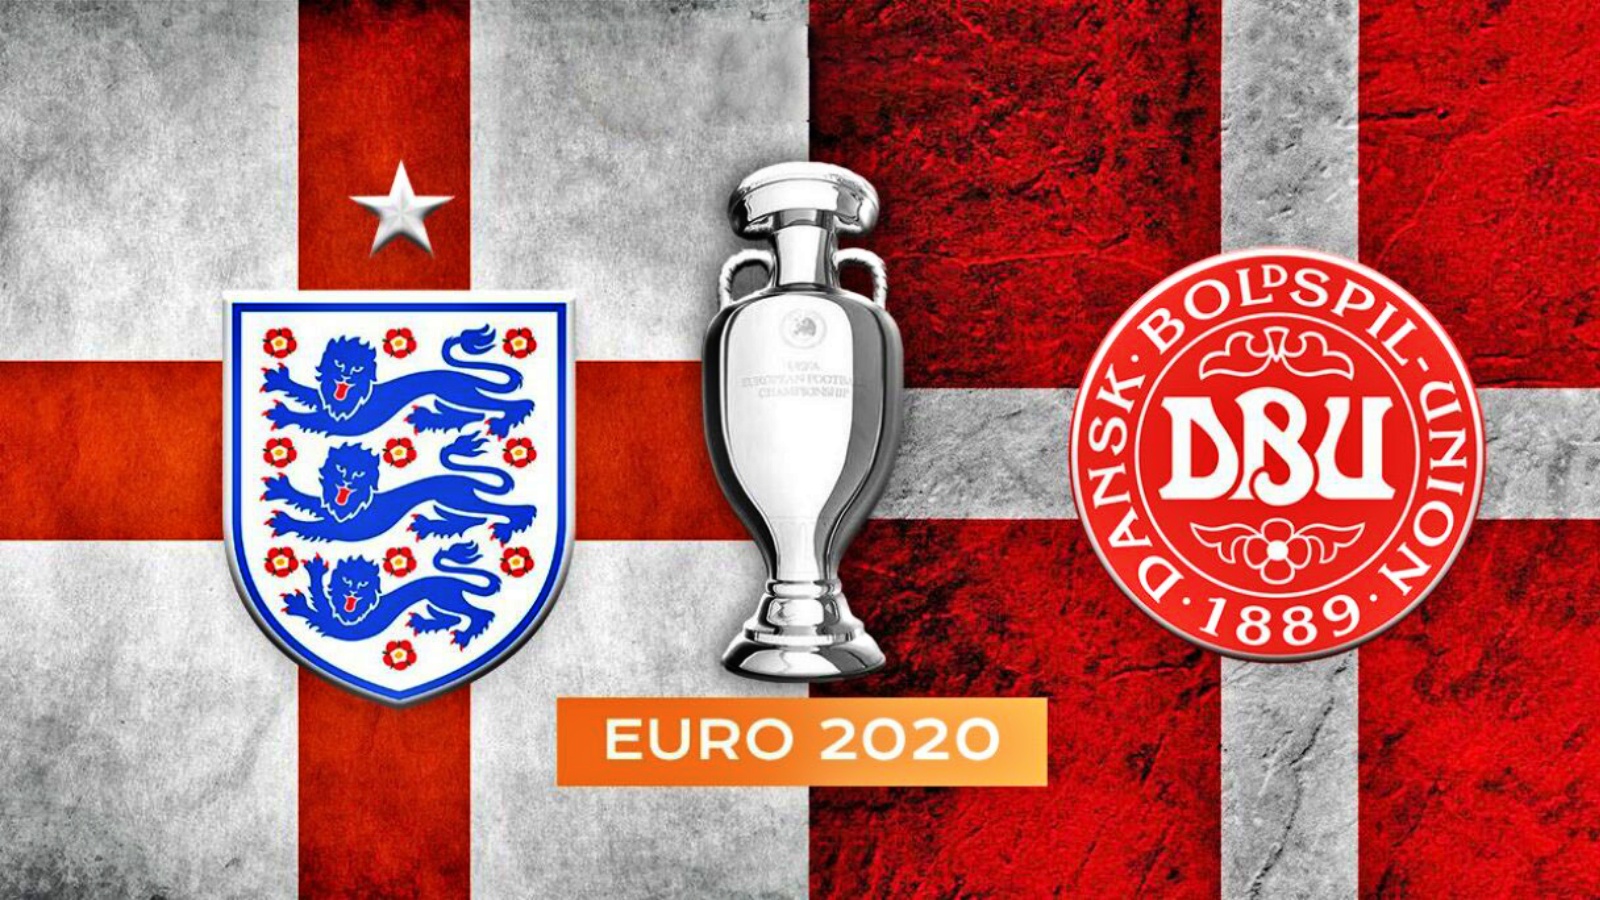 ANGLETERRE - DANEMARK LIVE PRO TV EURO 2020